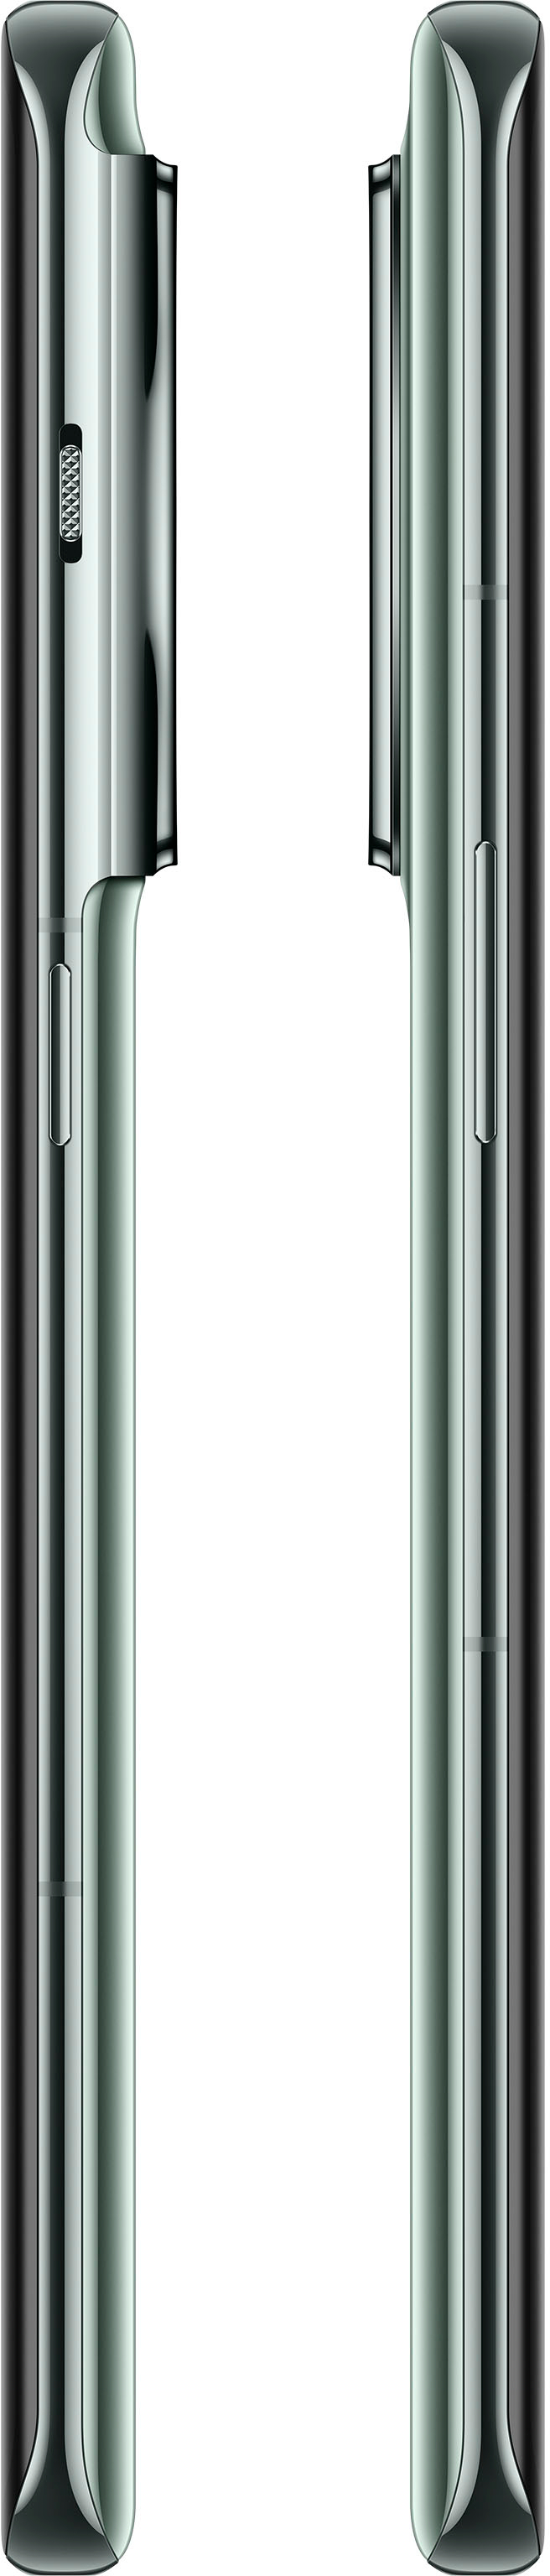 OnePlus 11 5G  (Eternal Green, 16GB RAM, 256GB Storage) 